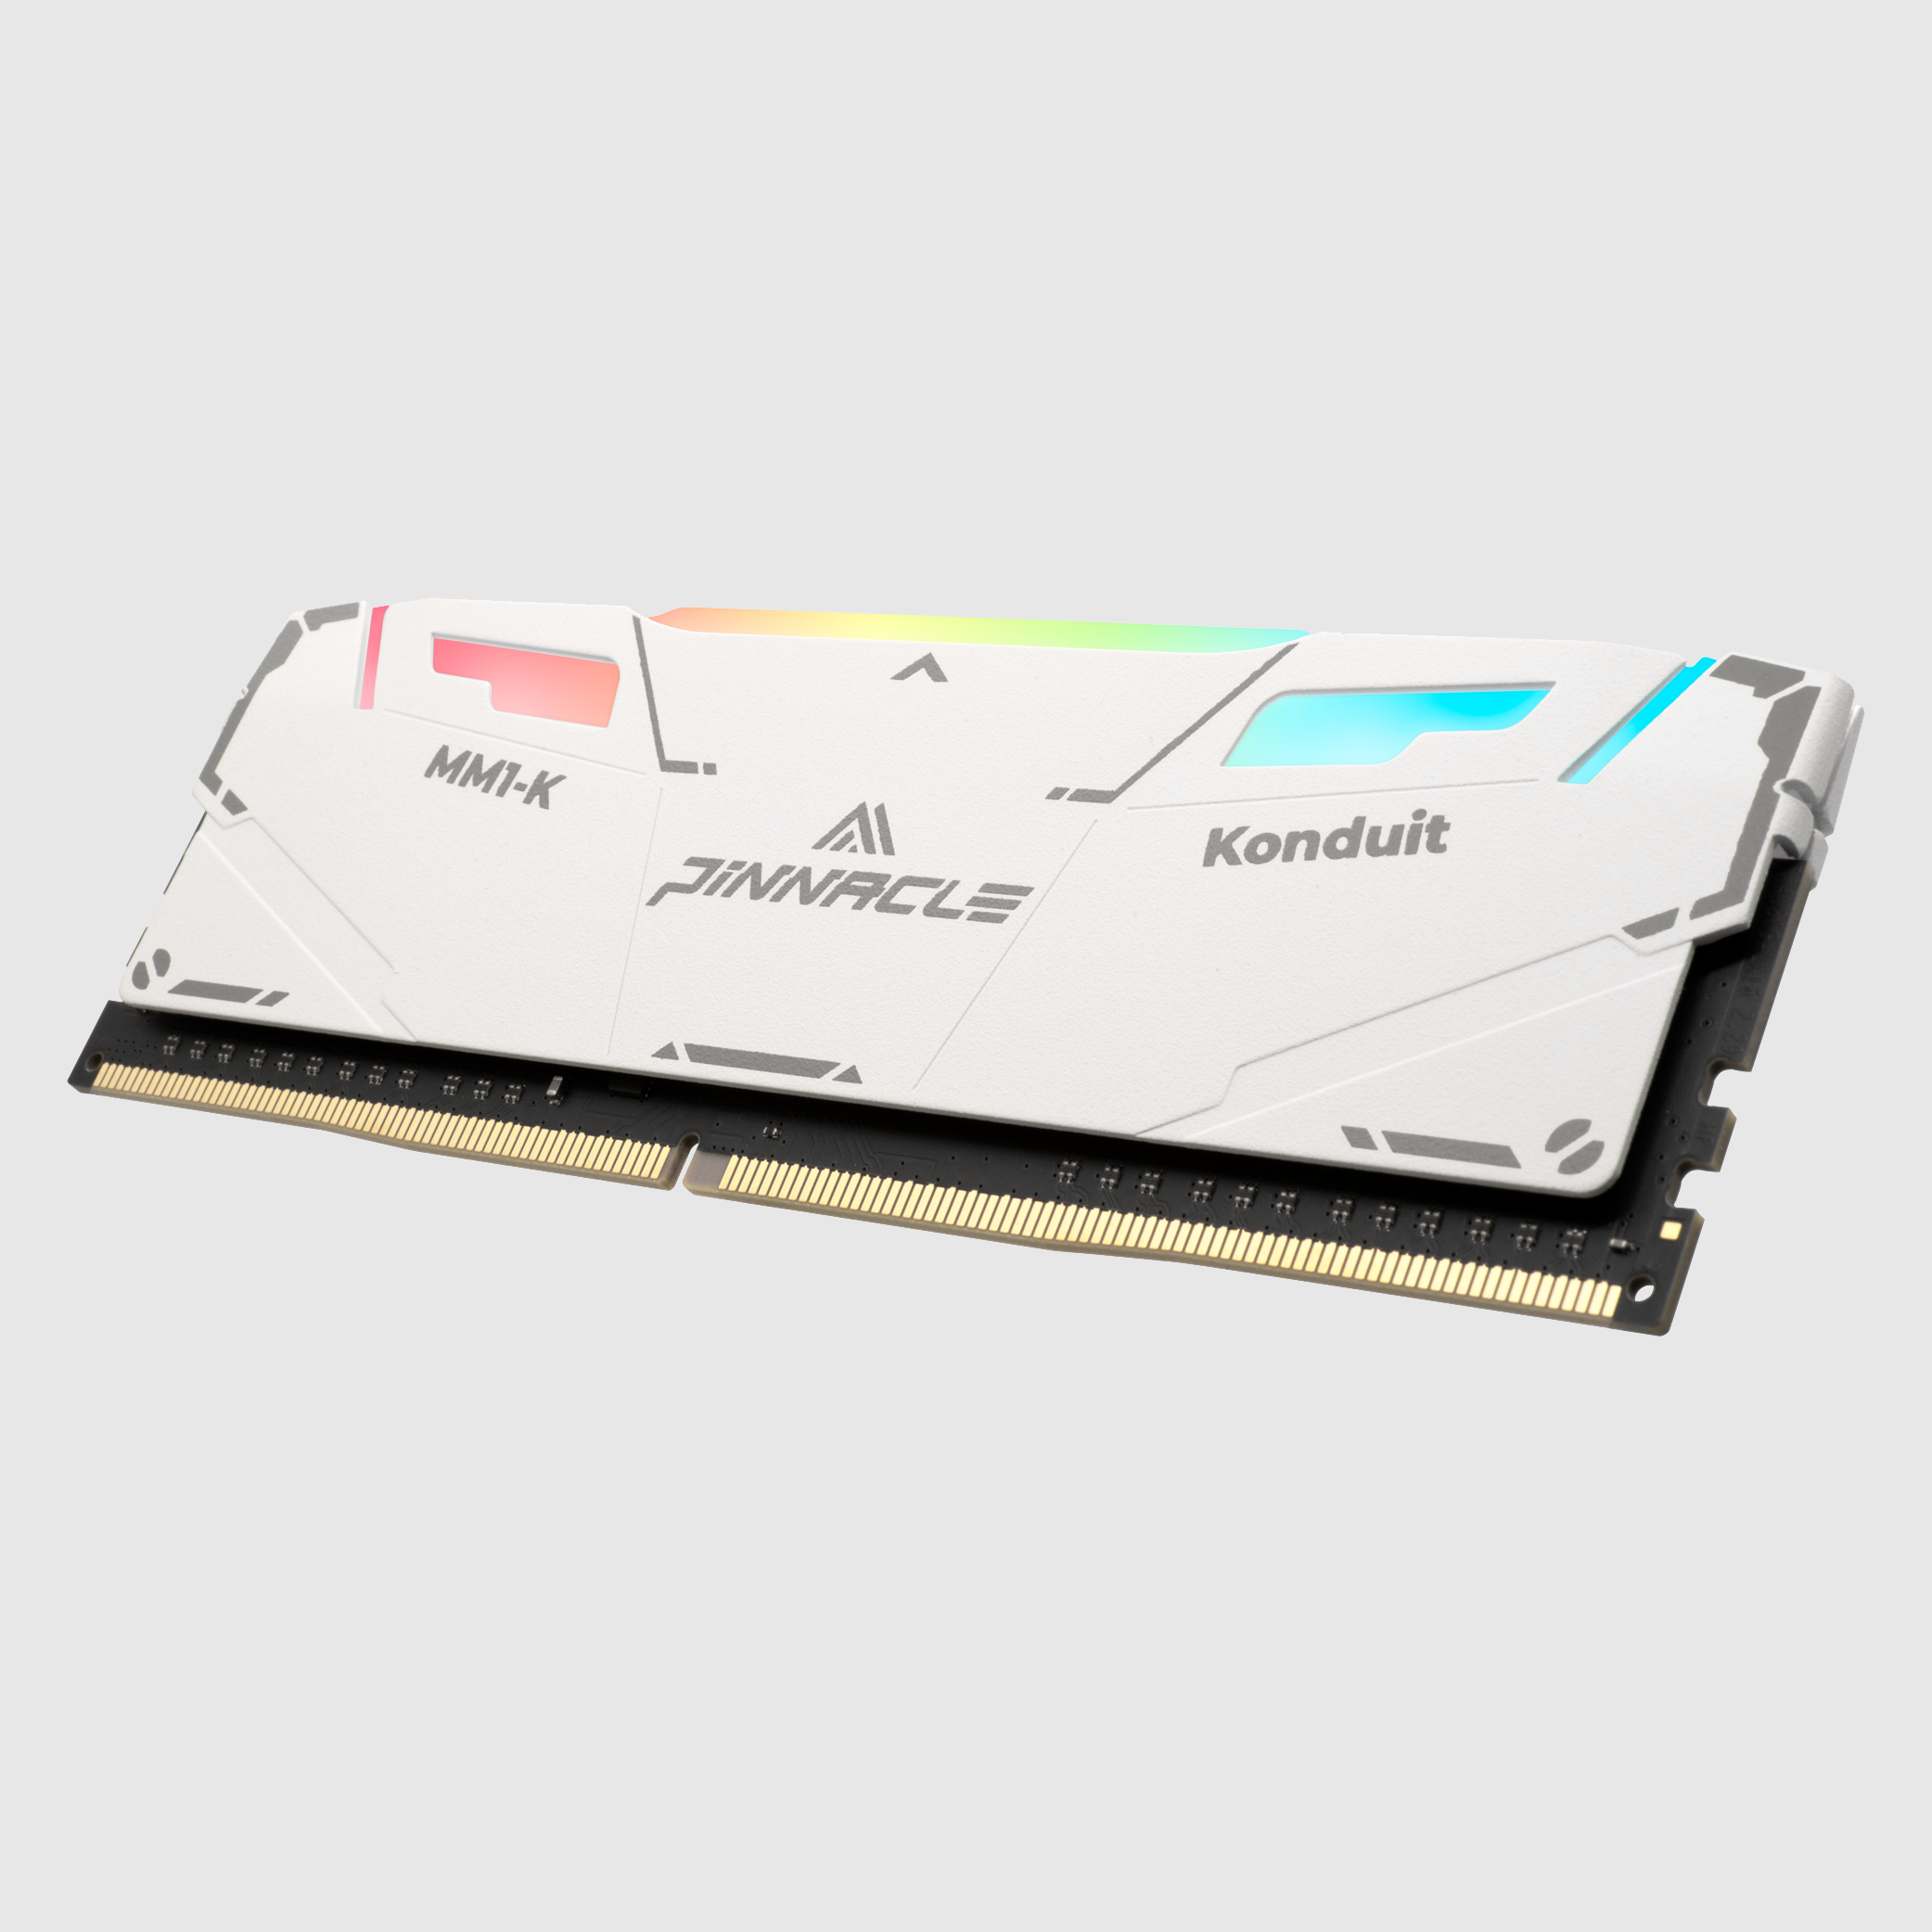 Pinnacle MM1-KONDUIT White RGB Performance DDR4 Memory